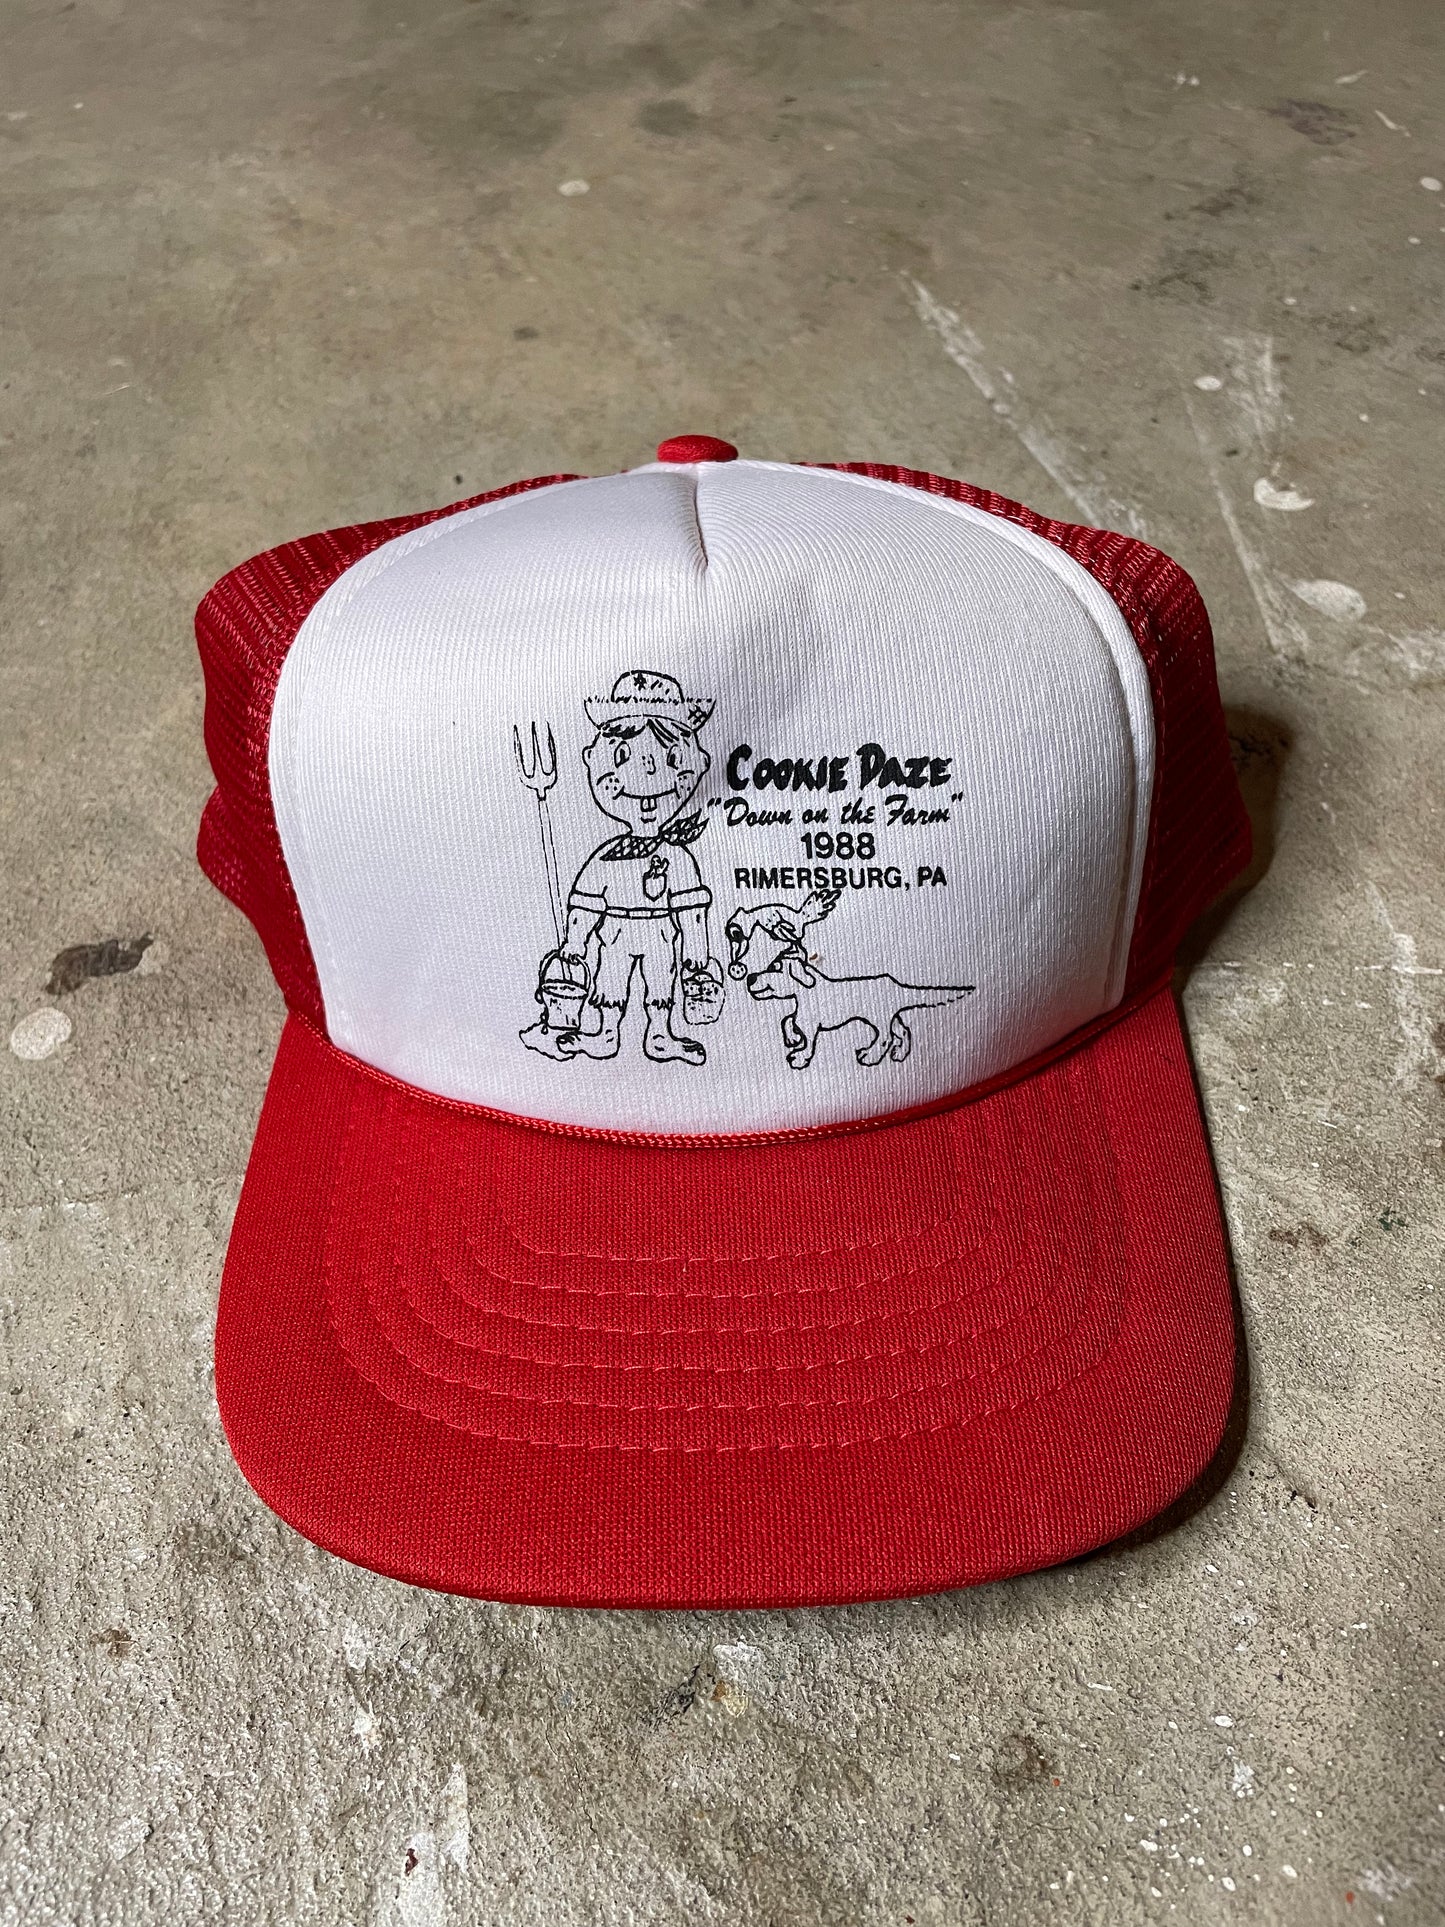 1988 ‘Cookie Daze’ Trucker Hat